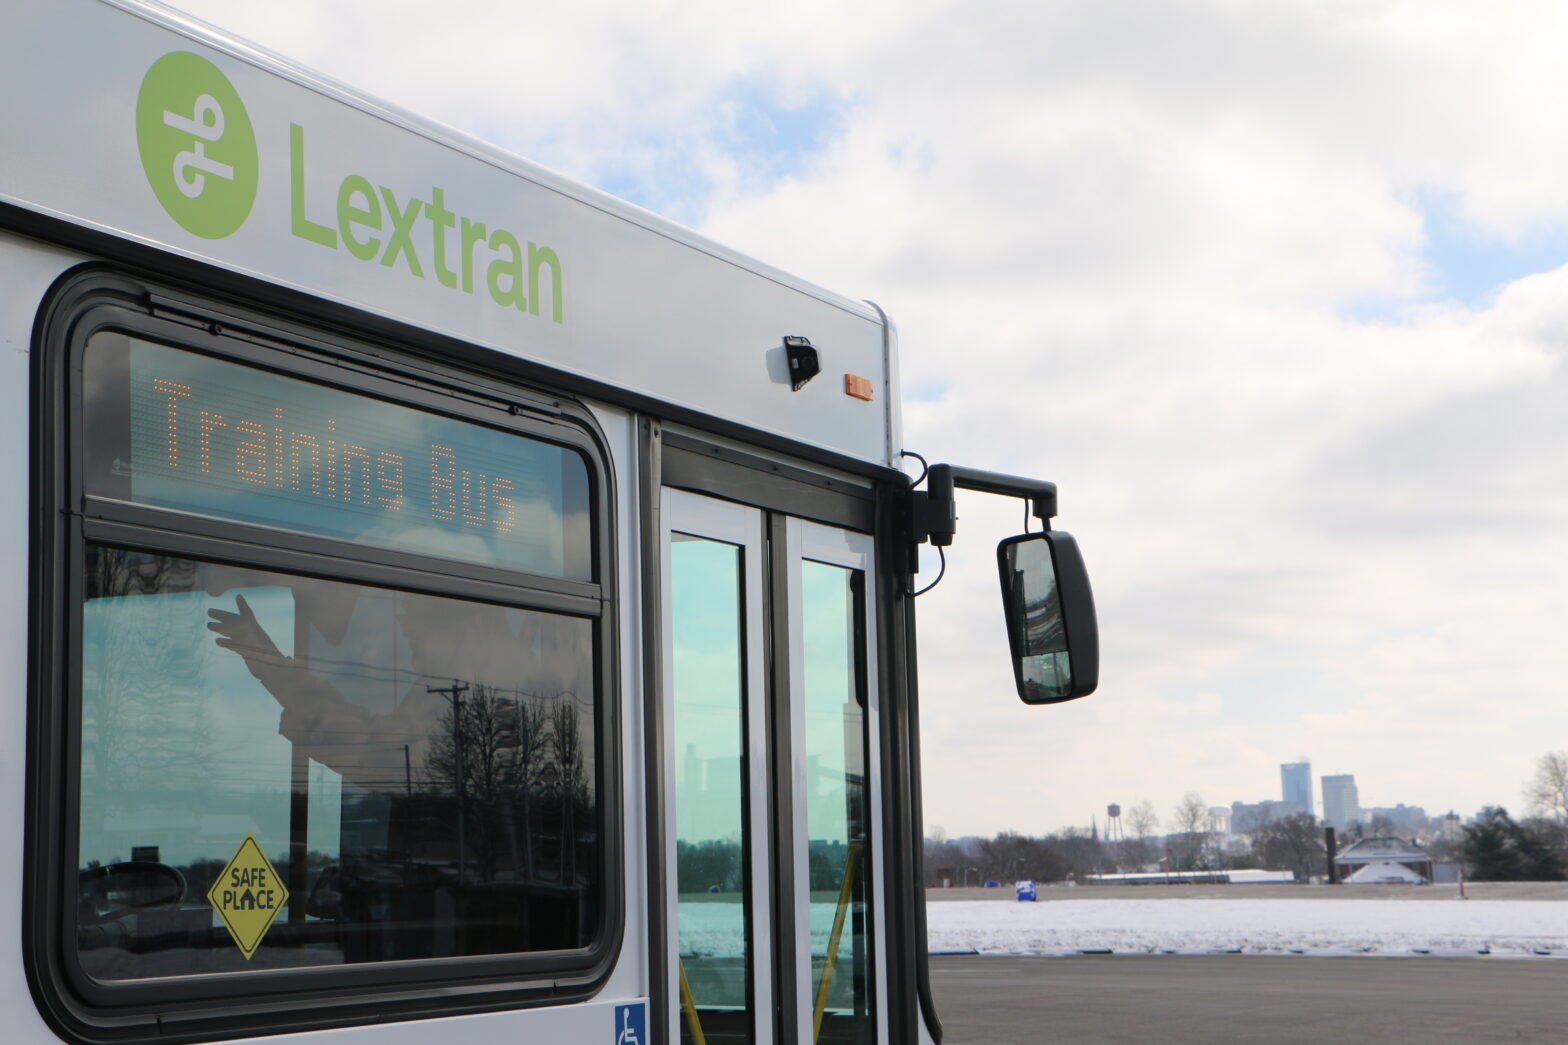 Lextran bus logo